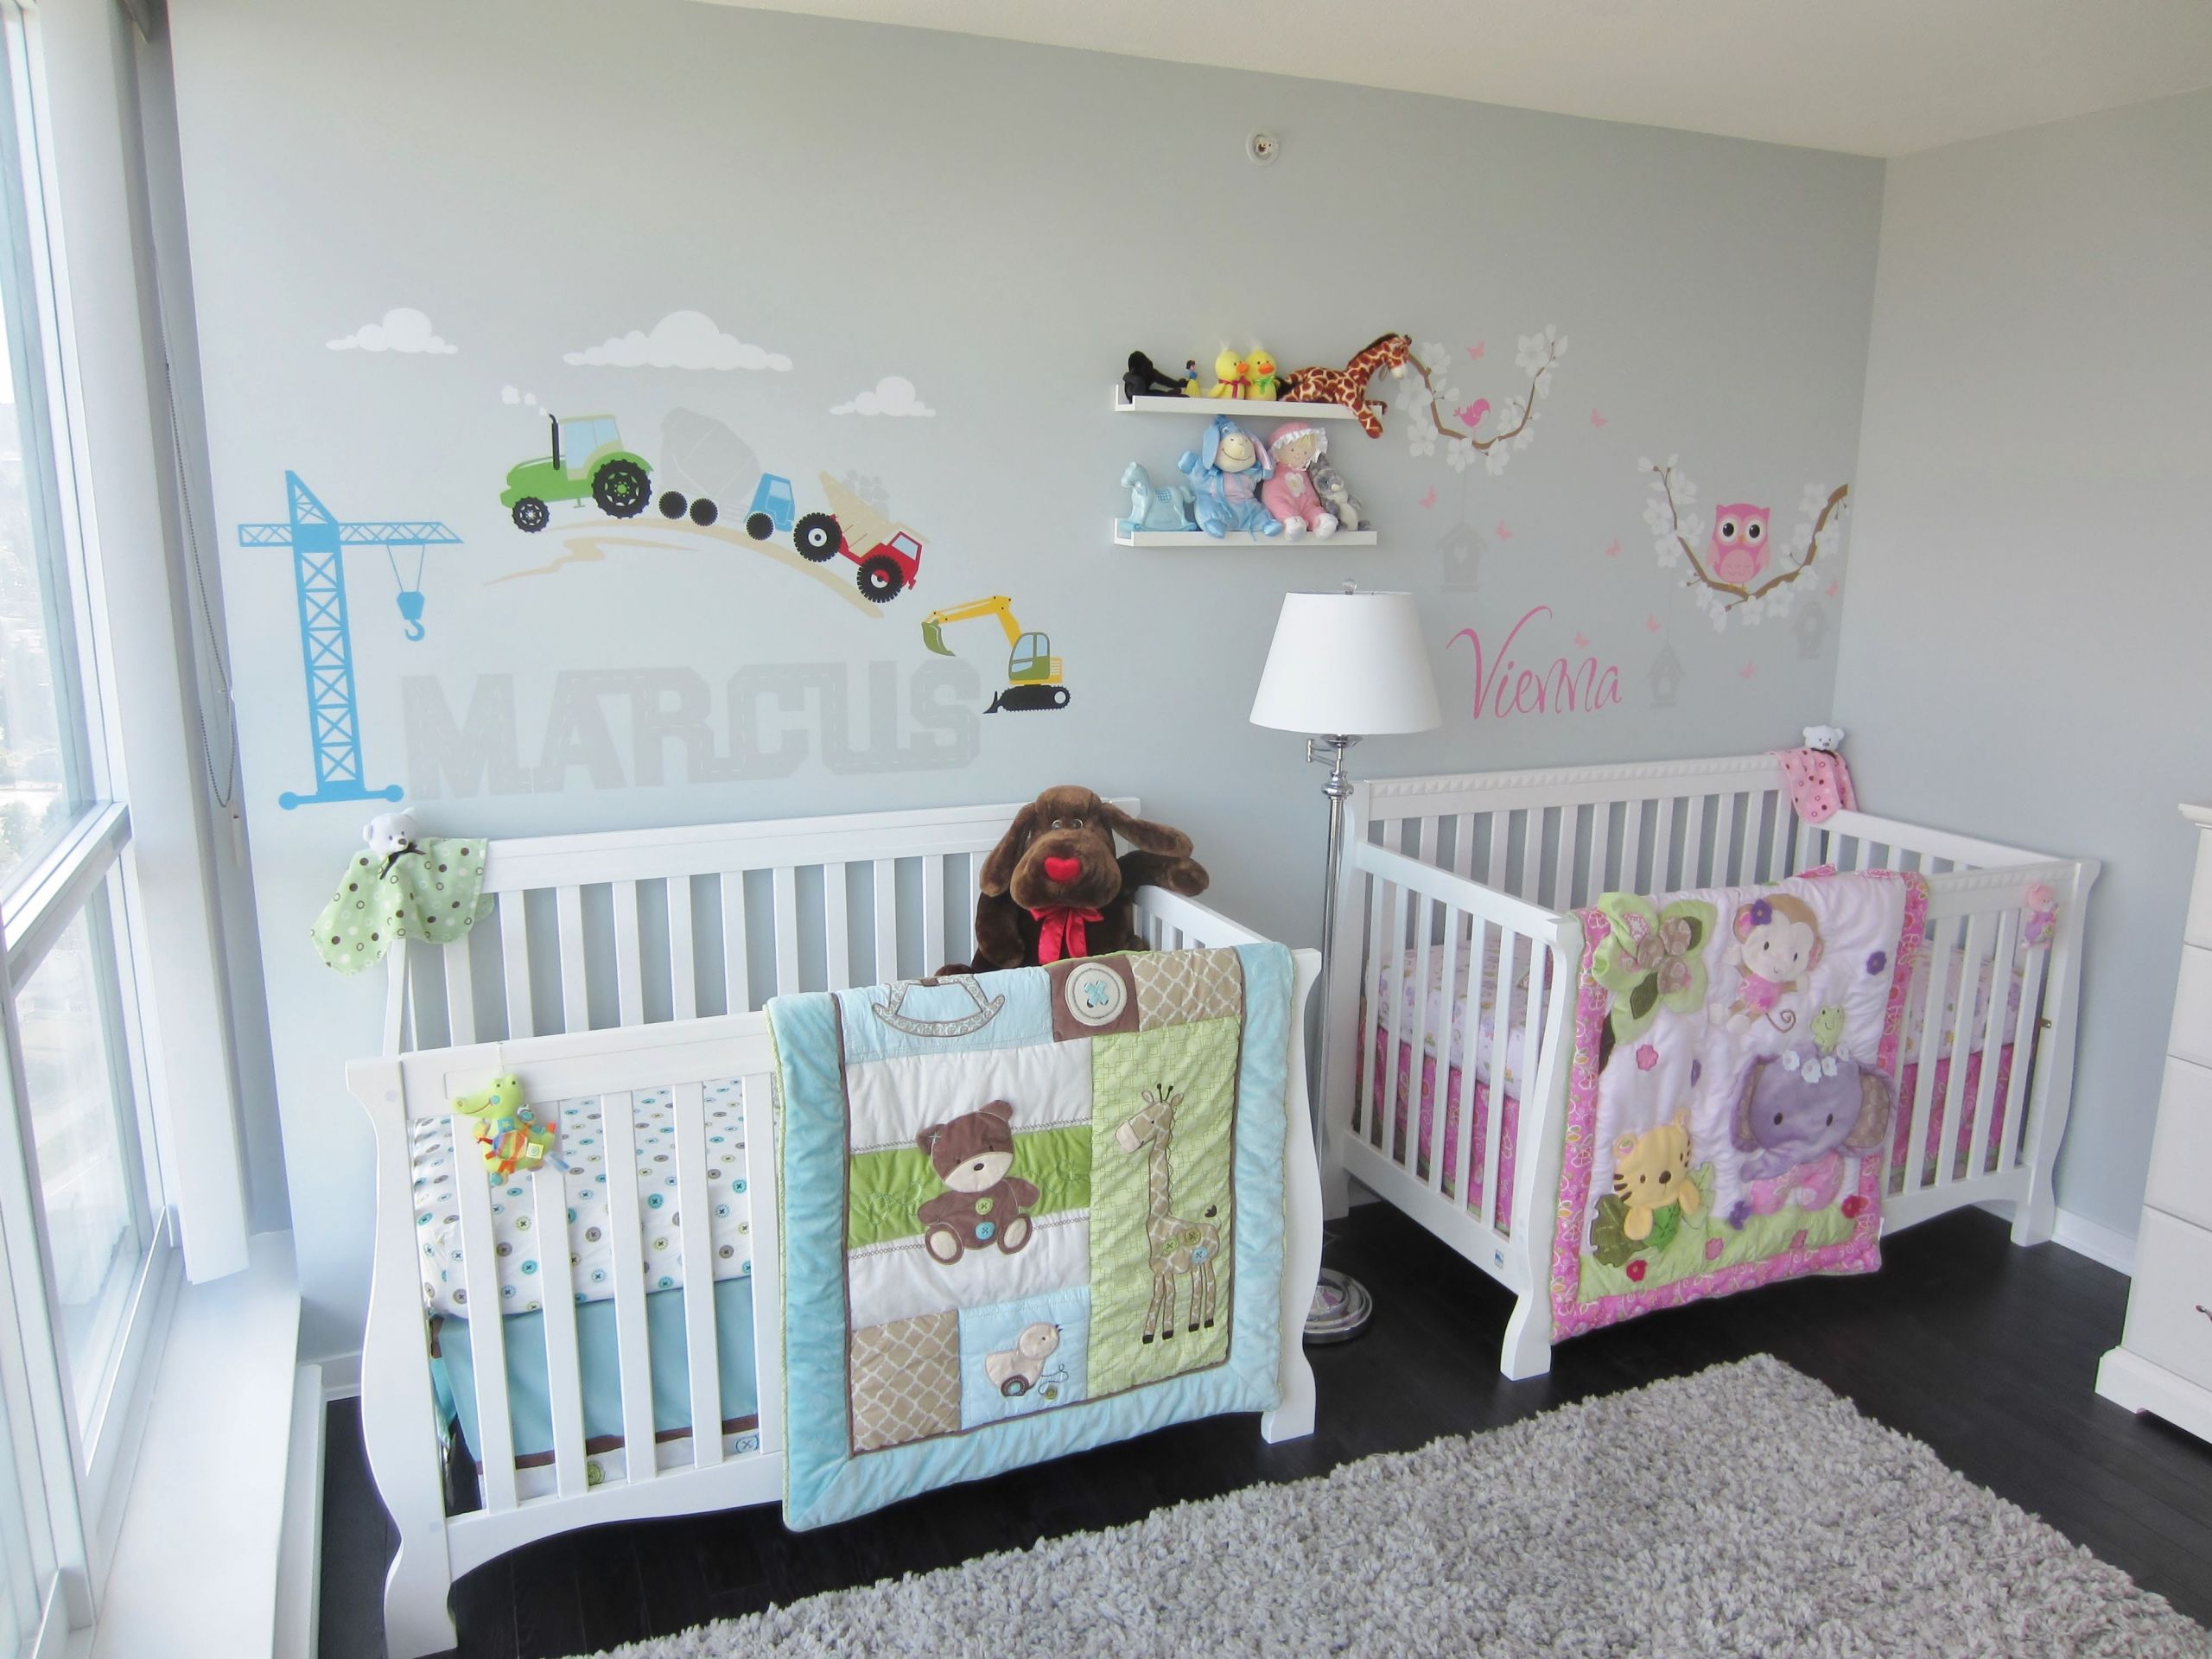 Twins Baby Room Decorating Ideas
 Twins Nursery boy & girl